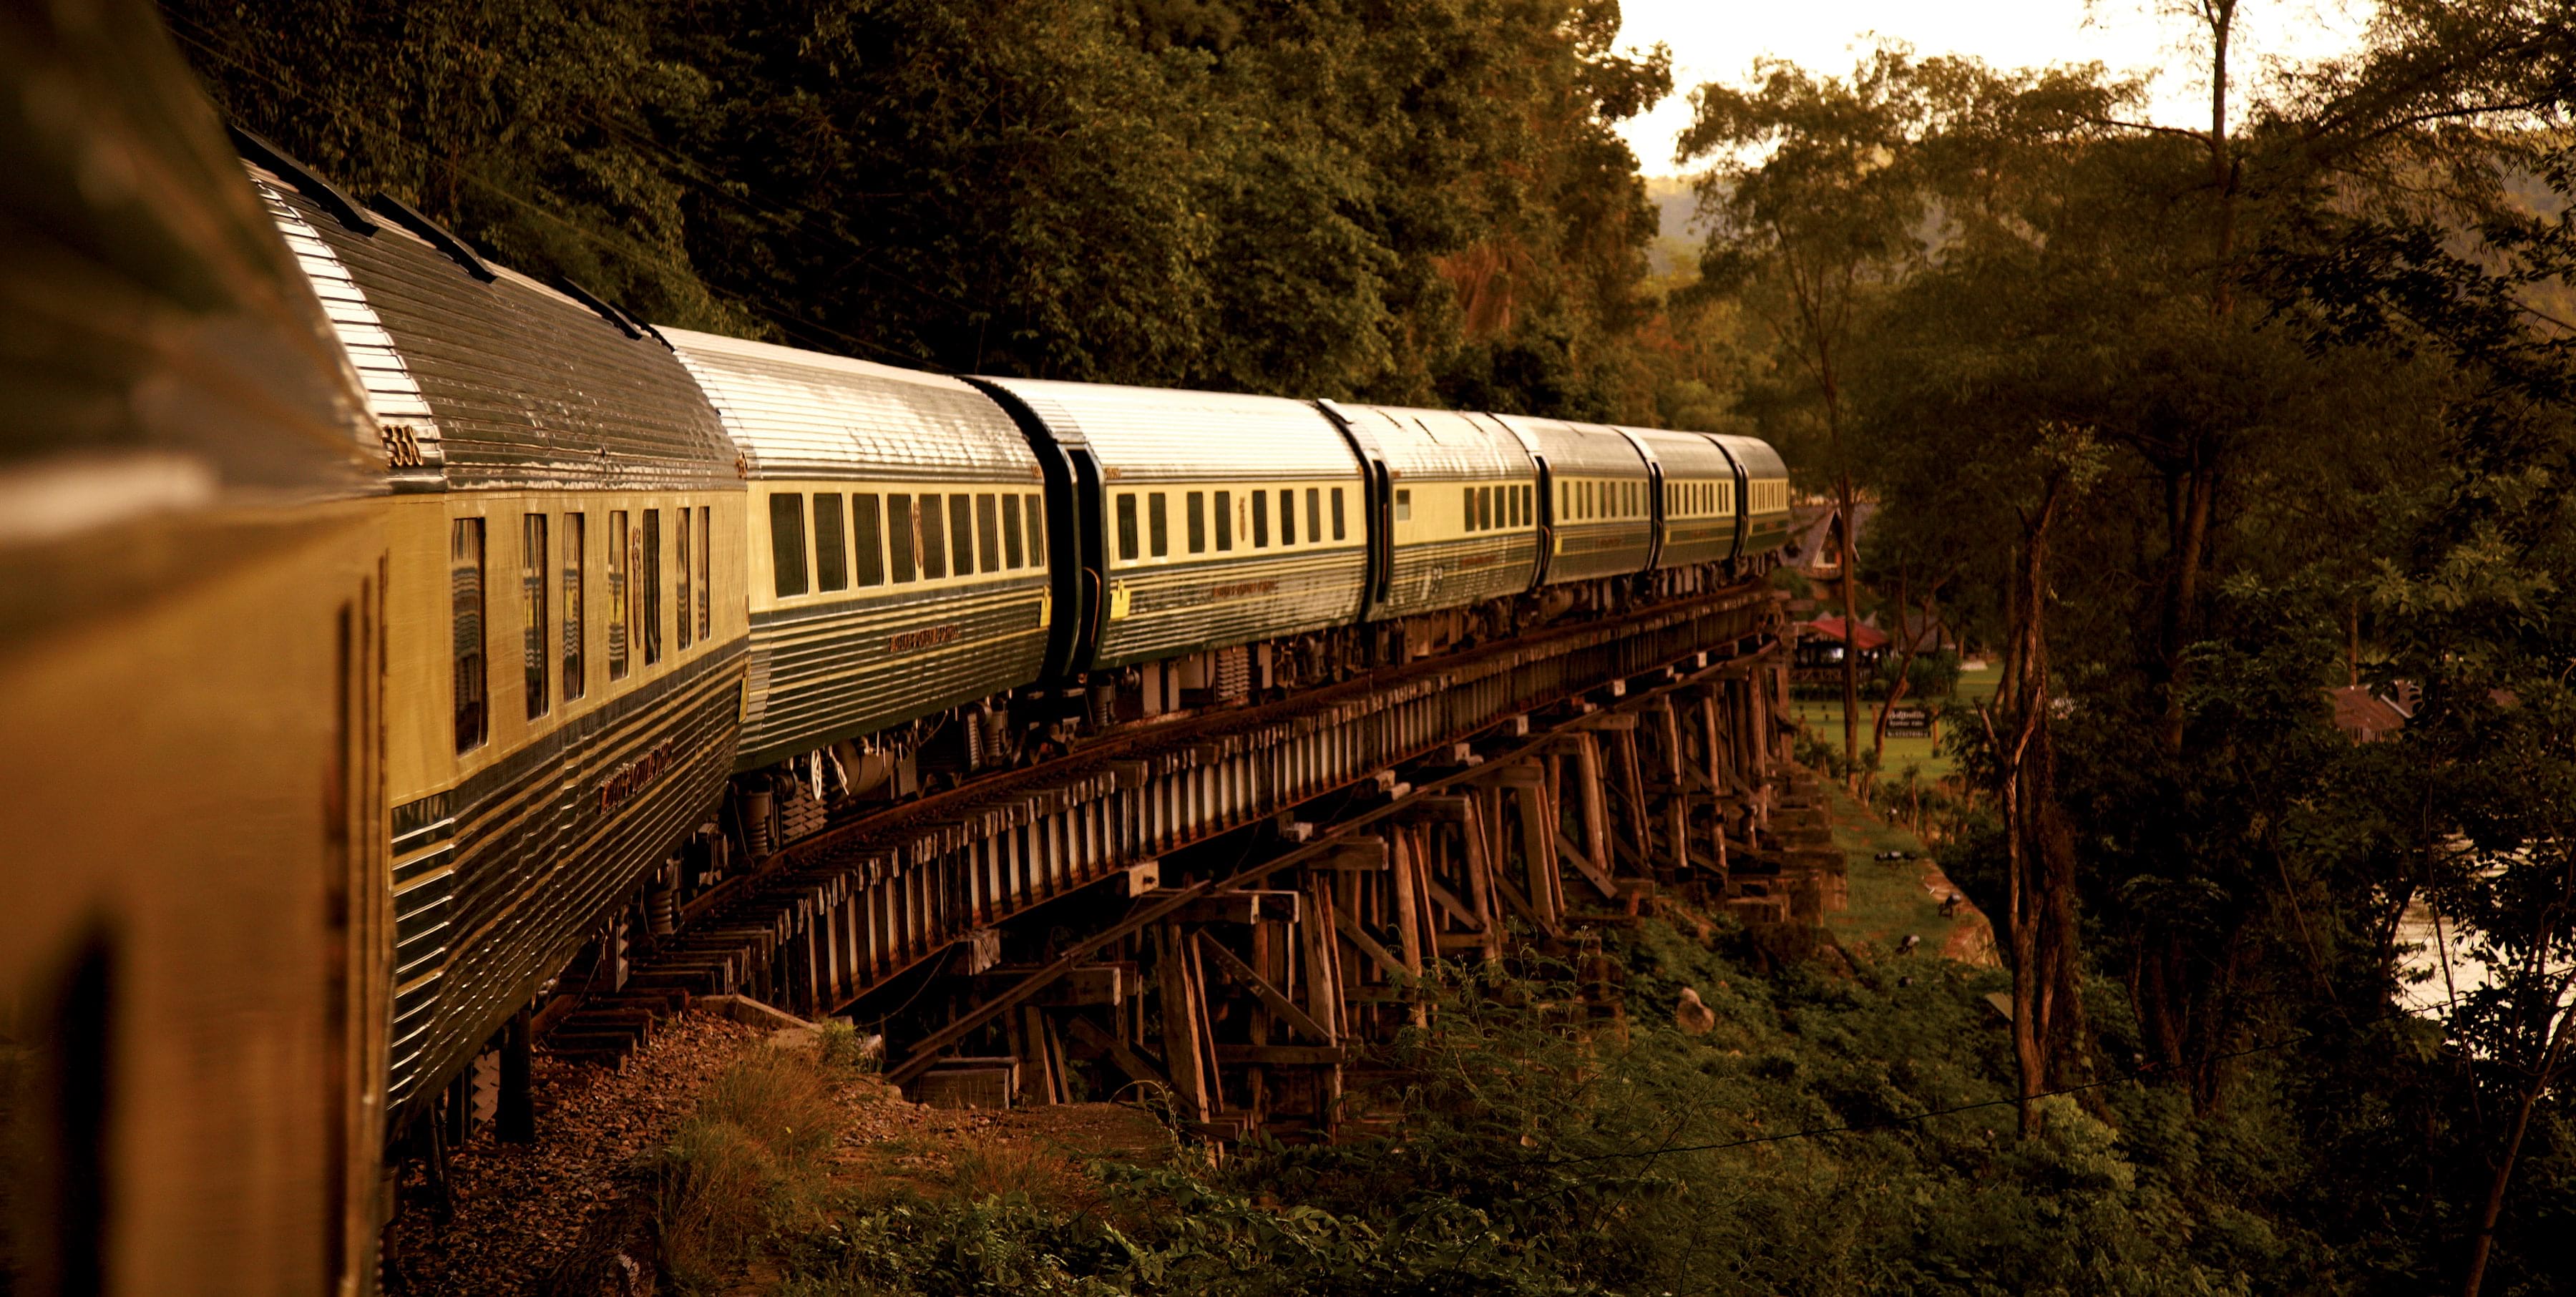 belmond train journeys uk